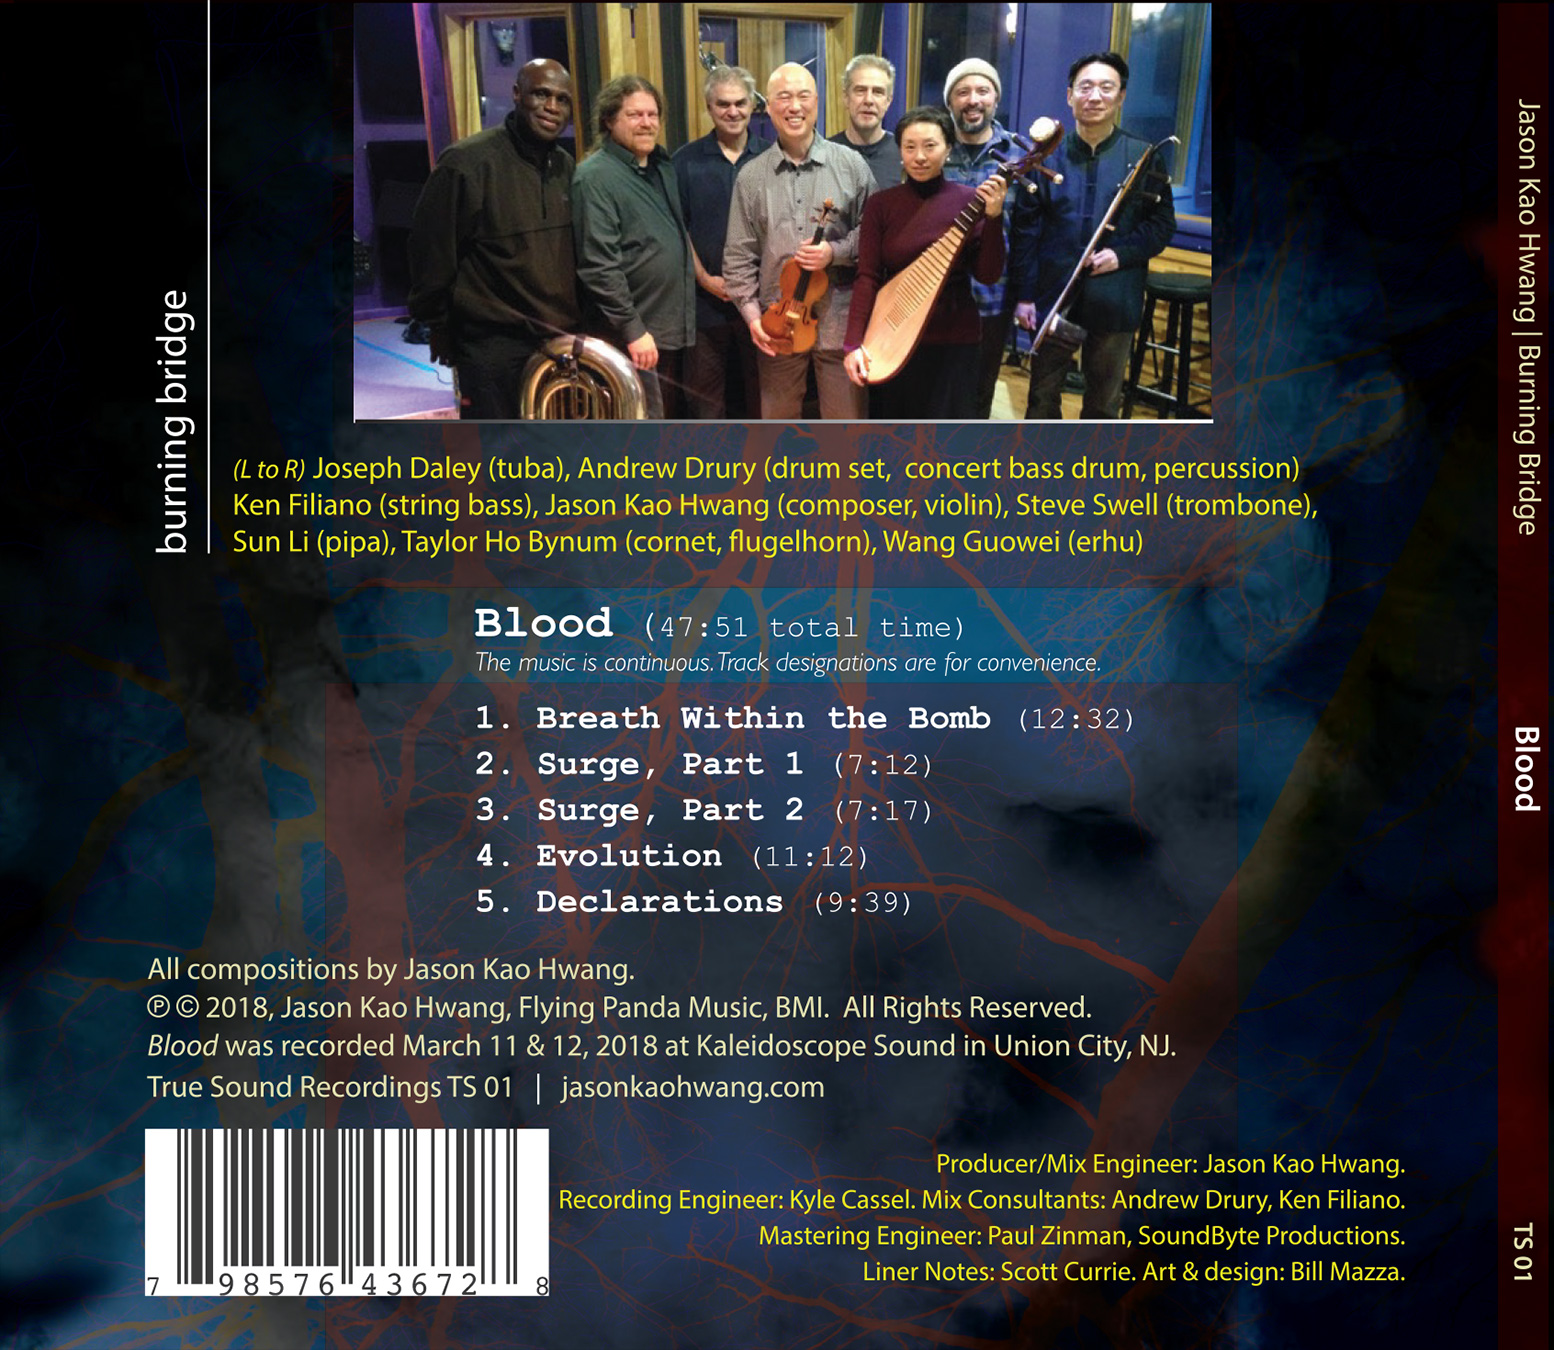 back cover of Jason Kao Hwang Burning Bridge's cd Blood showing band photo and tracklist